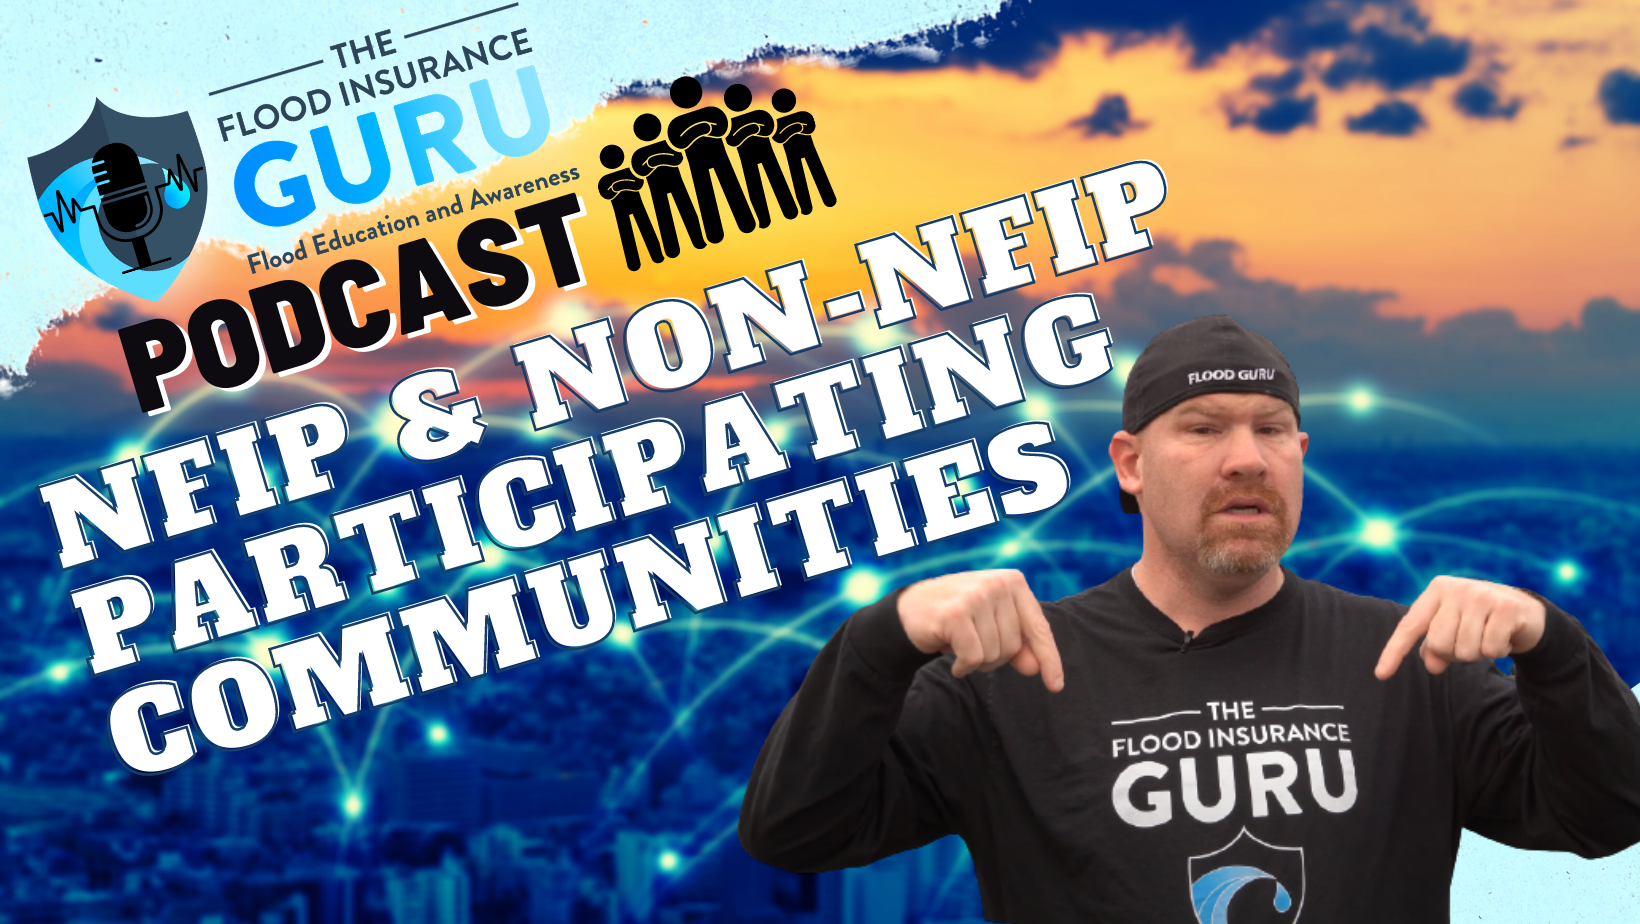 The Flood Insurance Guru | Podcast | Episode 8 | NFIP and Non-NFIP Participating Communities